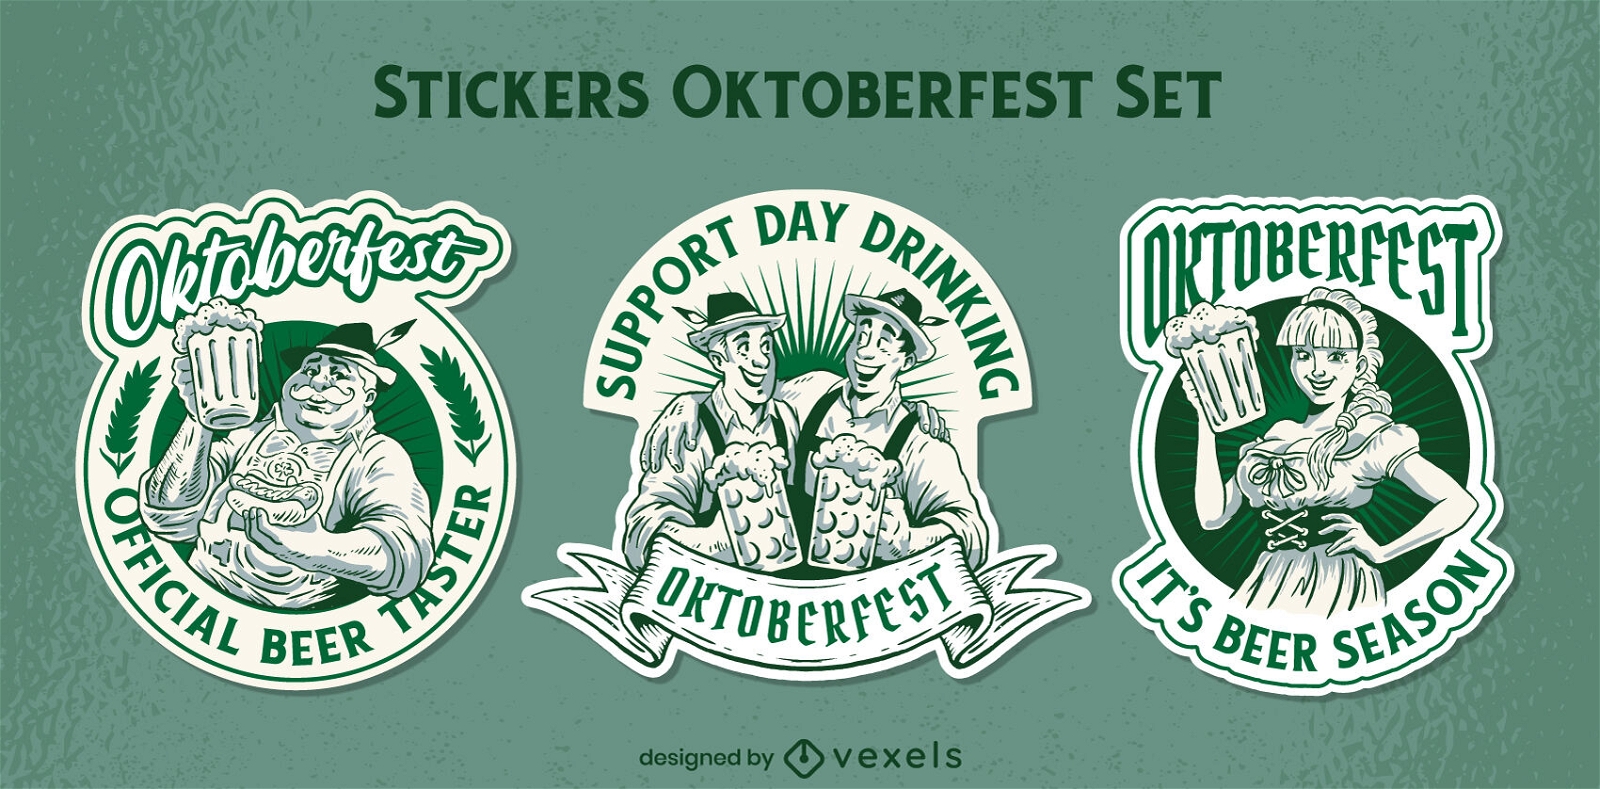 Oktoberfest characters illustration stickers set